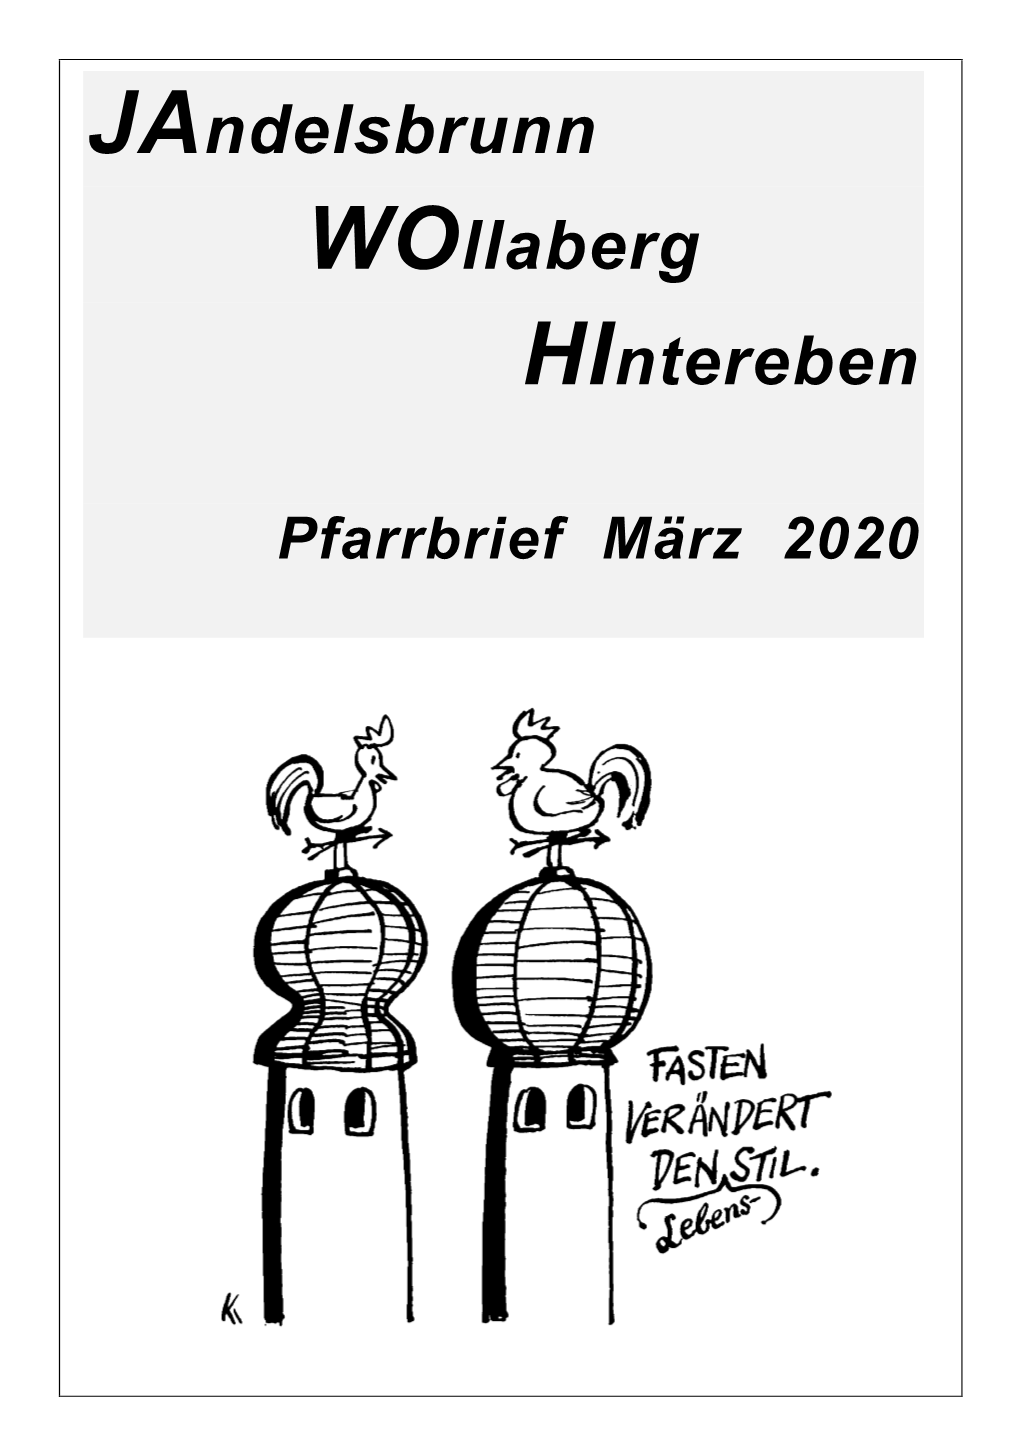 Jandelsbrunn Wollaberg Hintereben